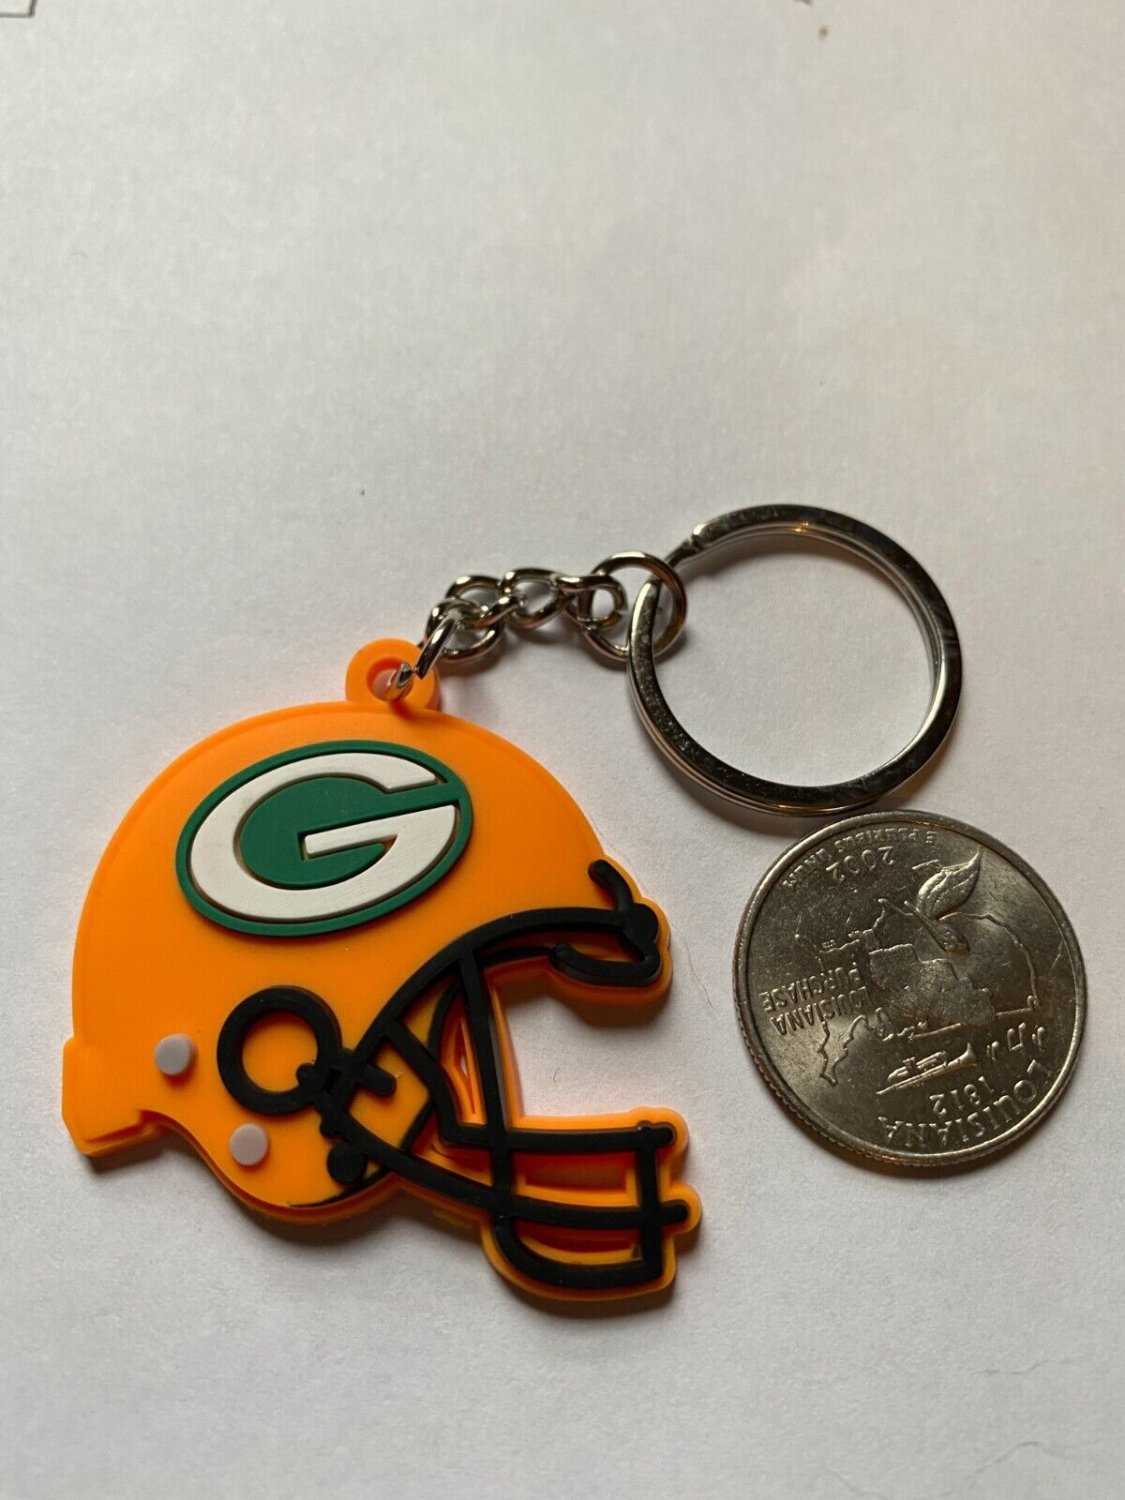 25 Green Bay Packers helmet key chains